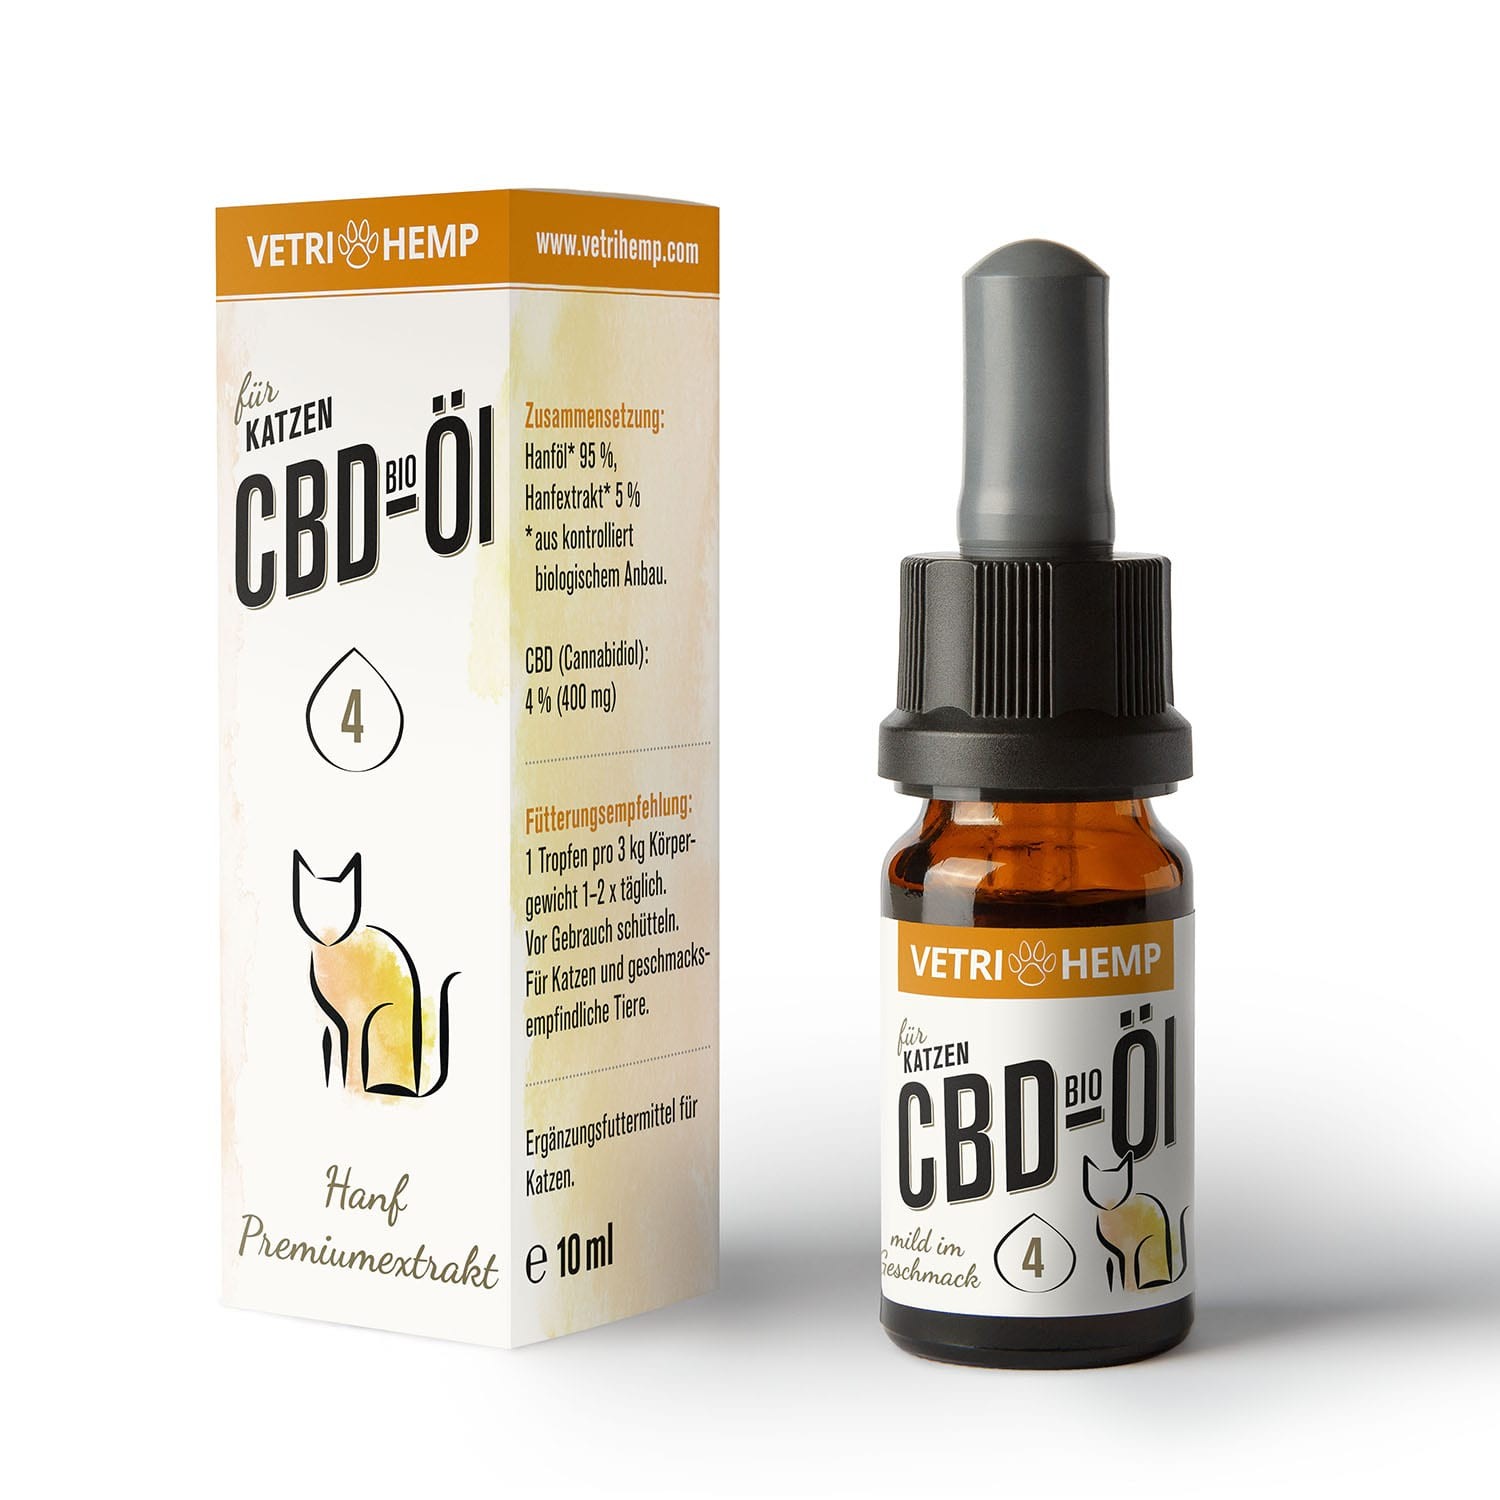 Vetrihemp Bio CBD Öl für Katzen - 4 % - 400 mg